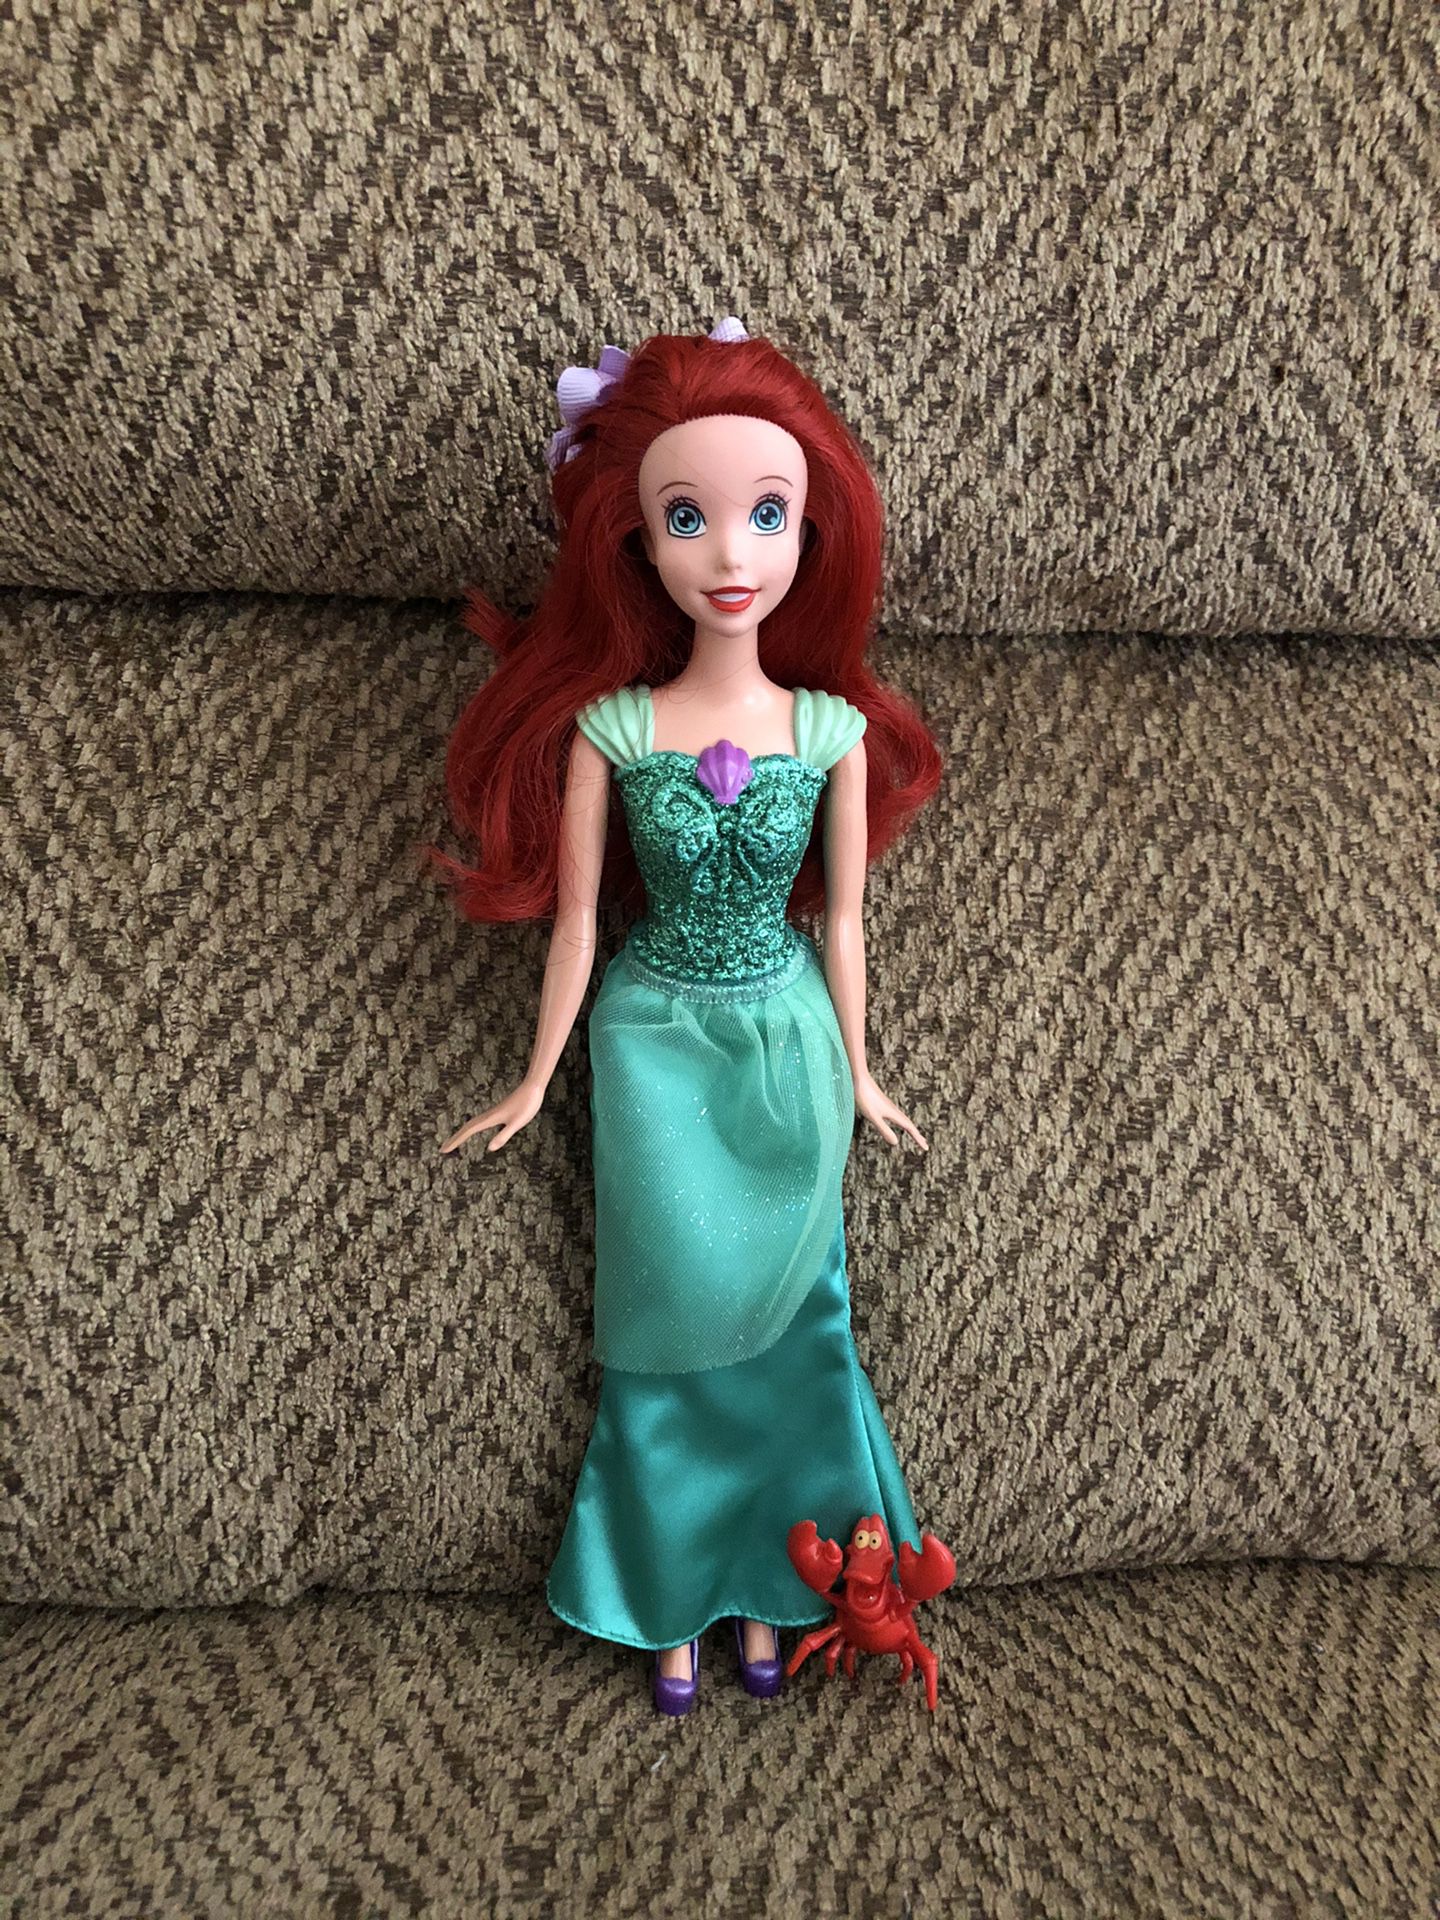 Disney Princess Ariel Barbie doll with Sebastian